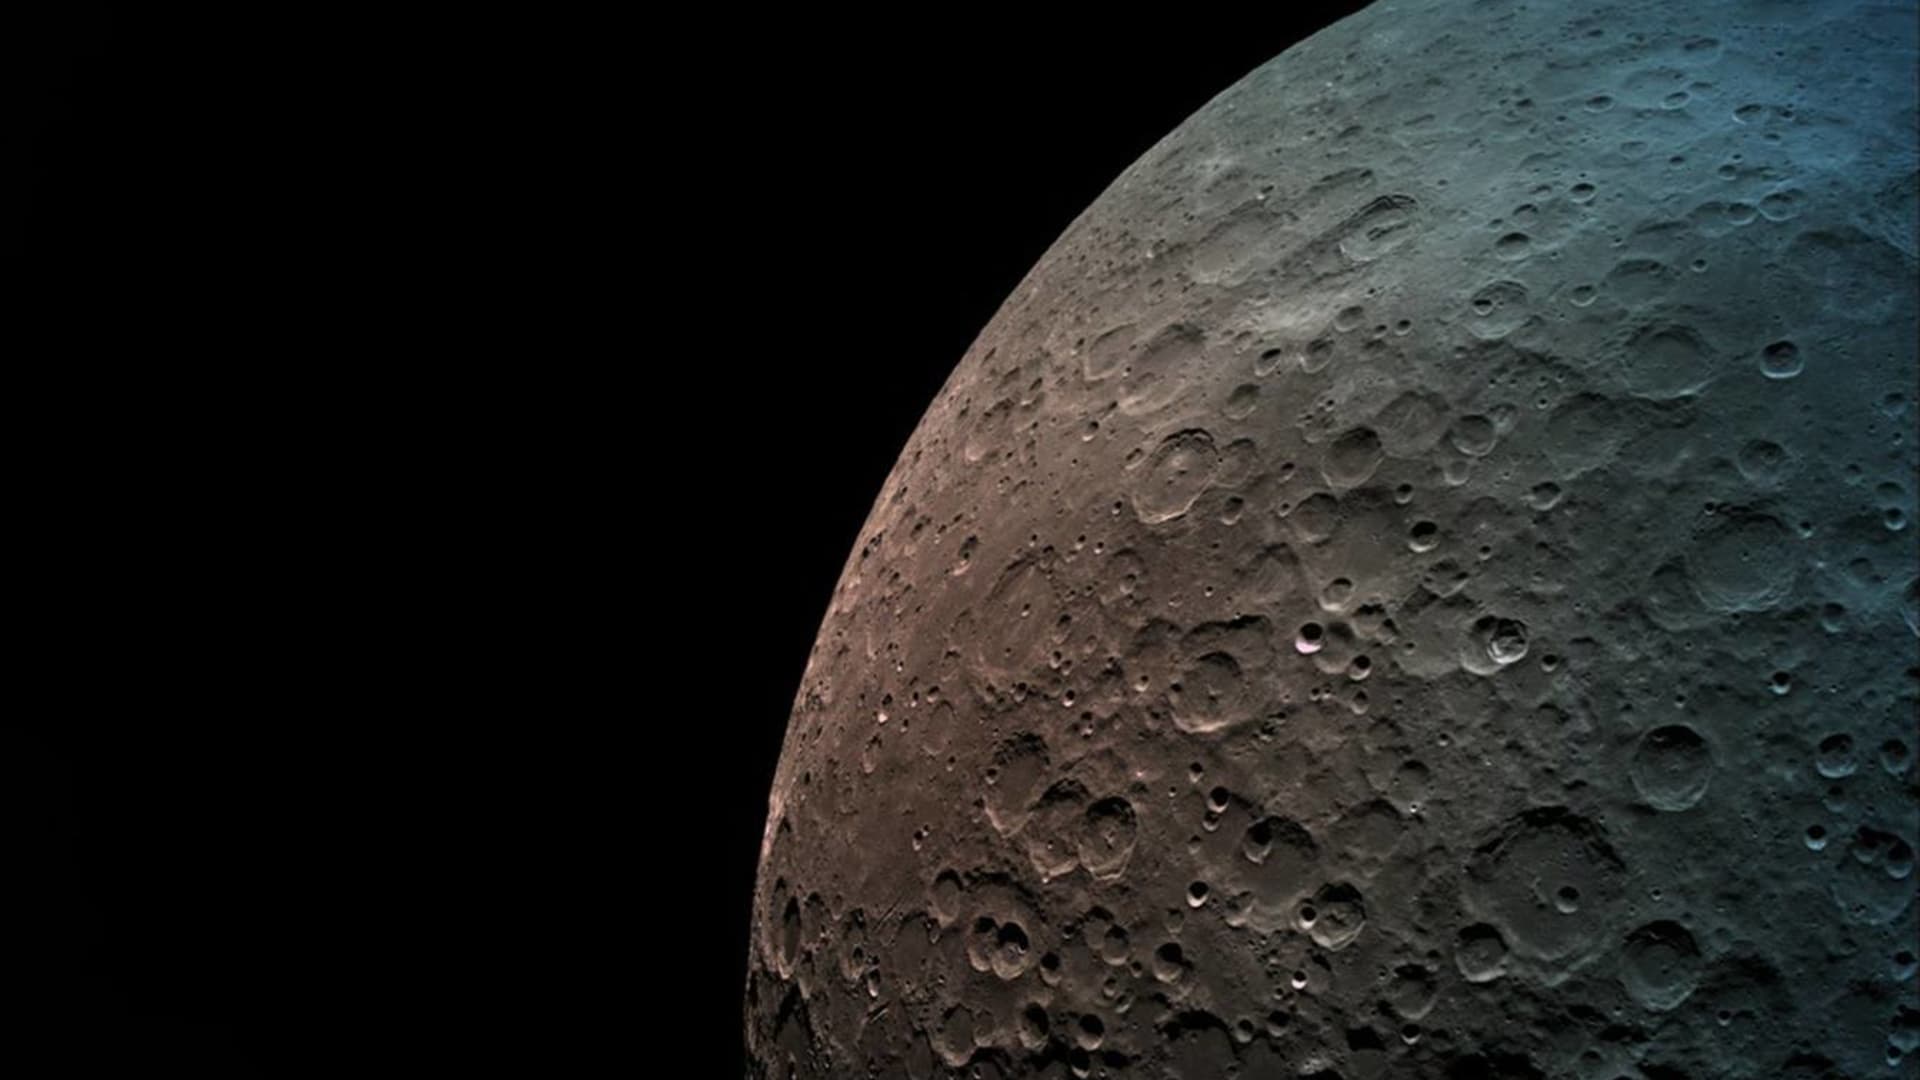 NASA will pay a company $1 to collect moon rocks